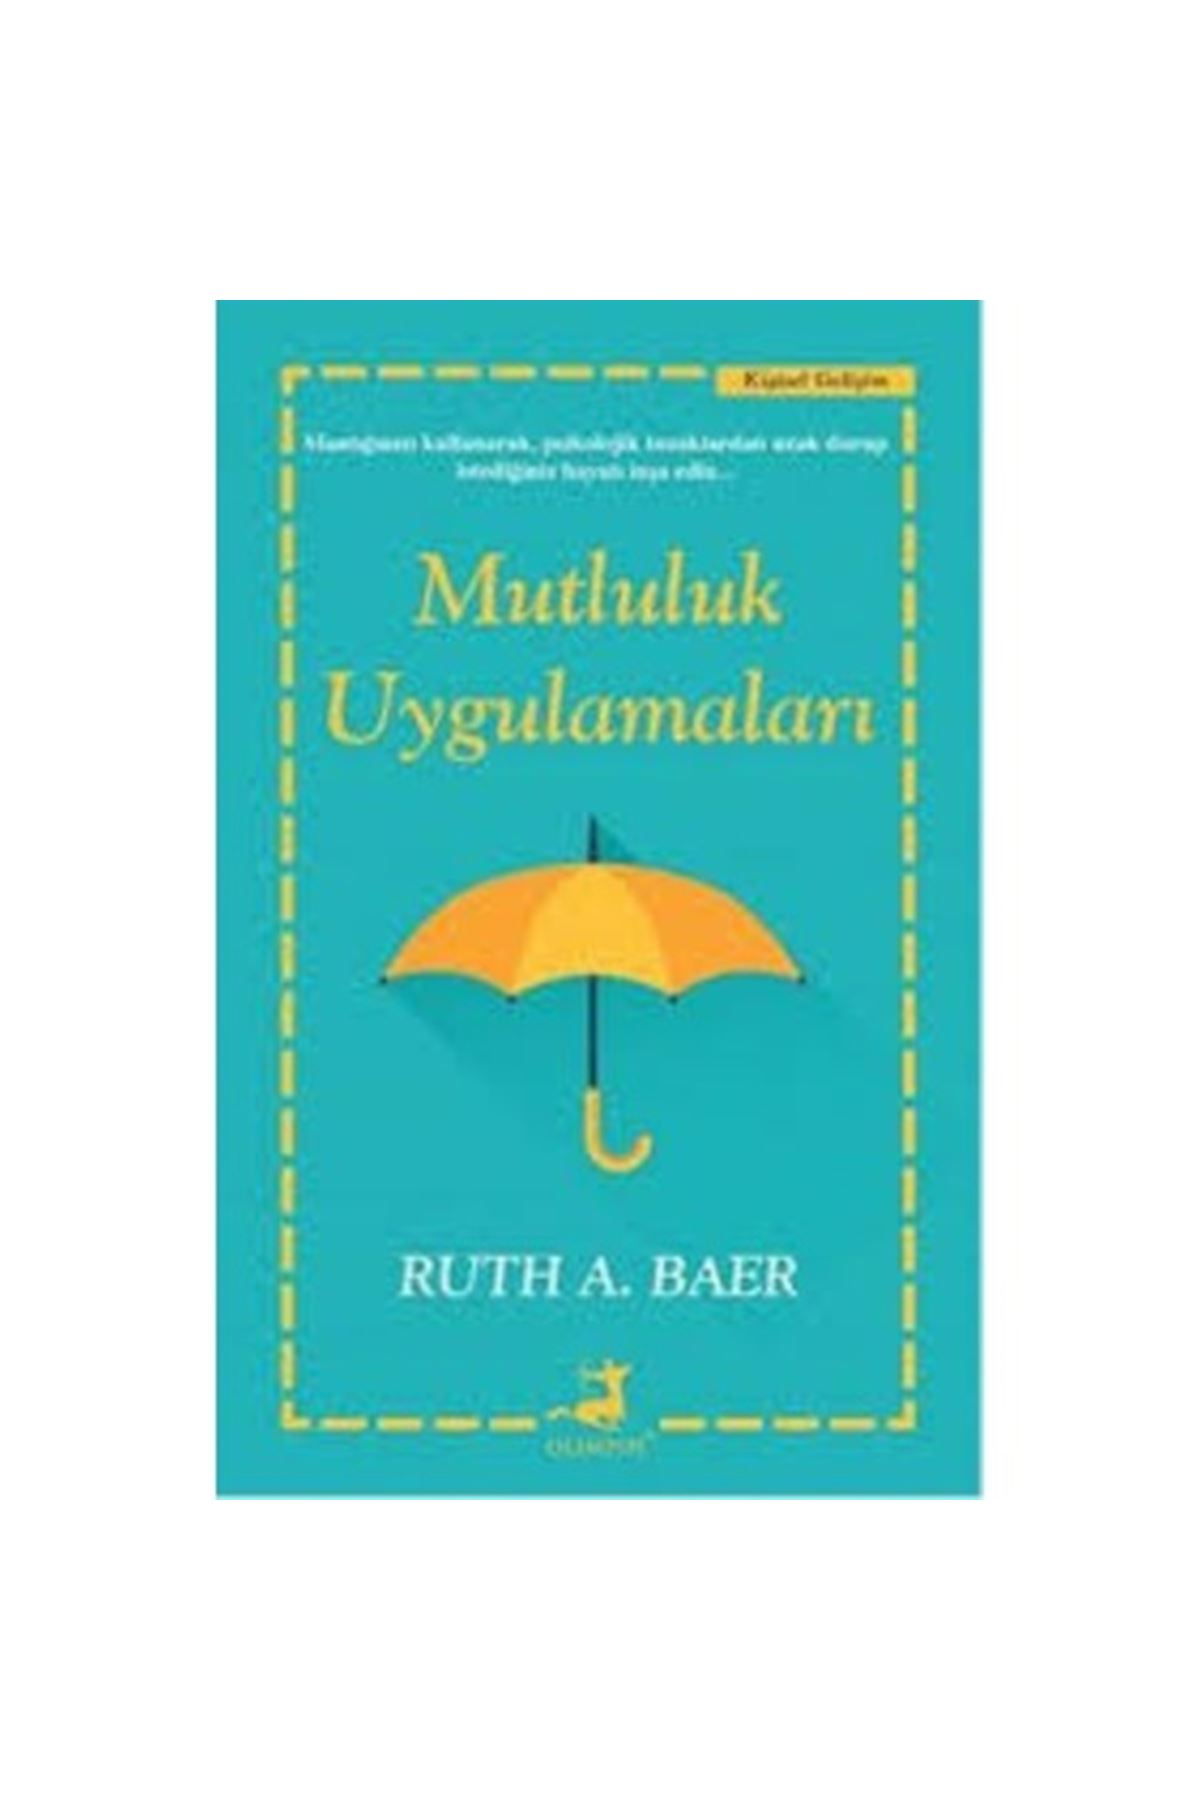 RUTH A. BAER - MUTLULUK UYGULAMALARI